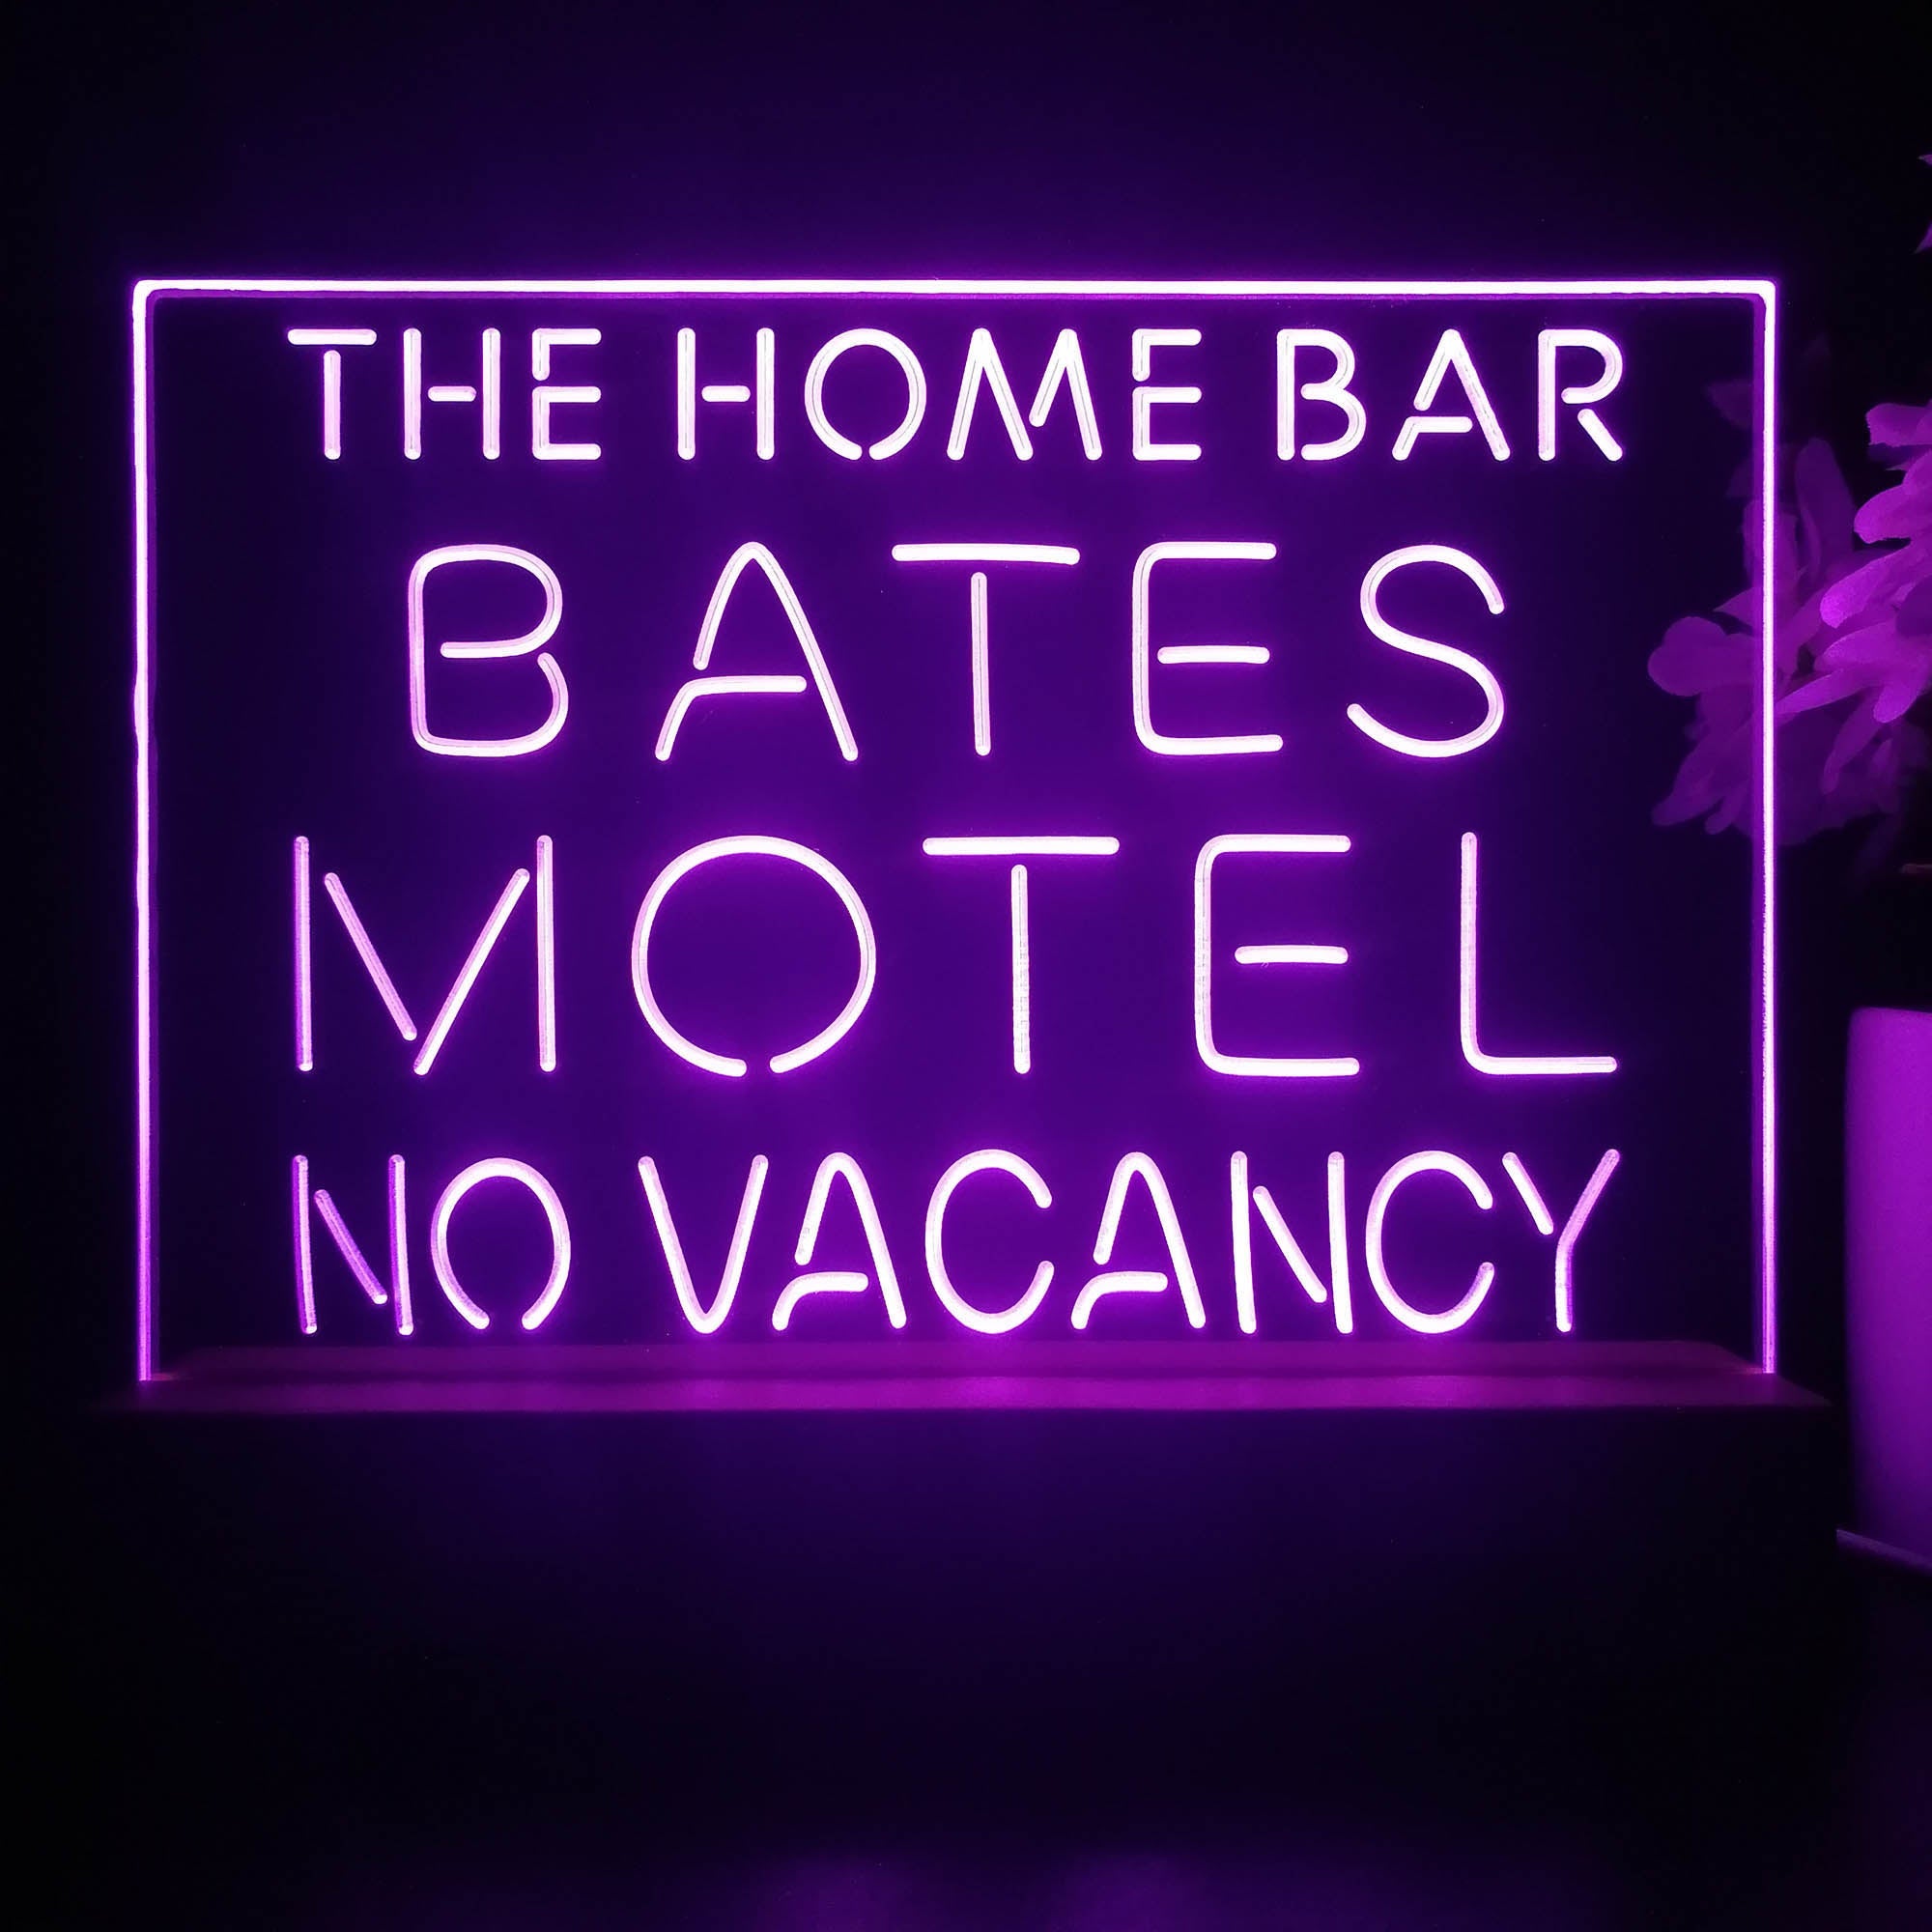 Personalized Bates Motel No Vacancy Souvenir Neon LED Night Light Sign